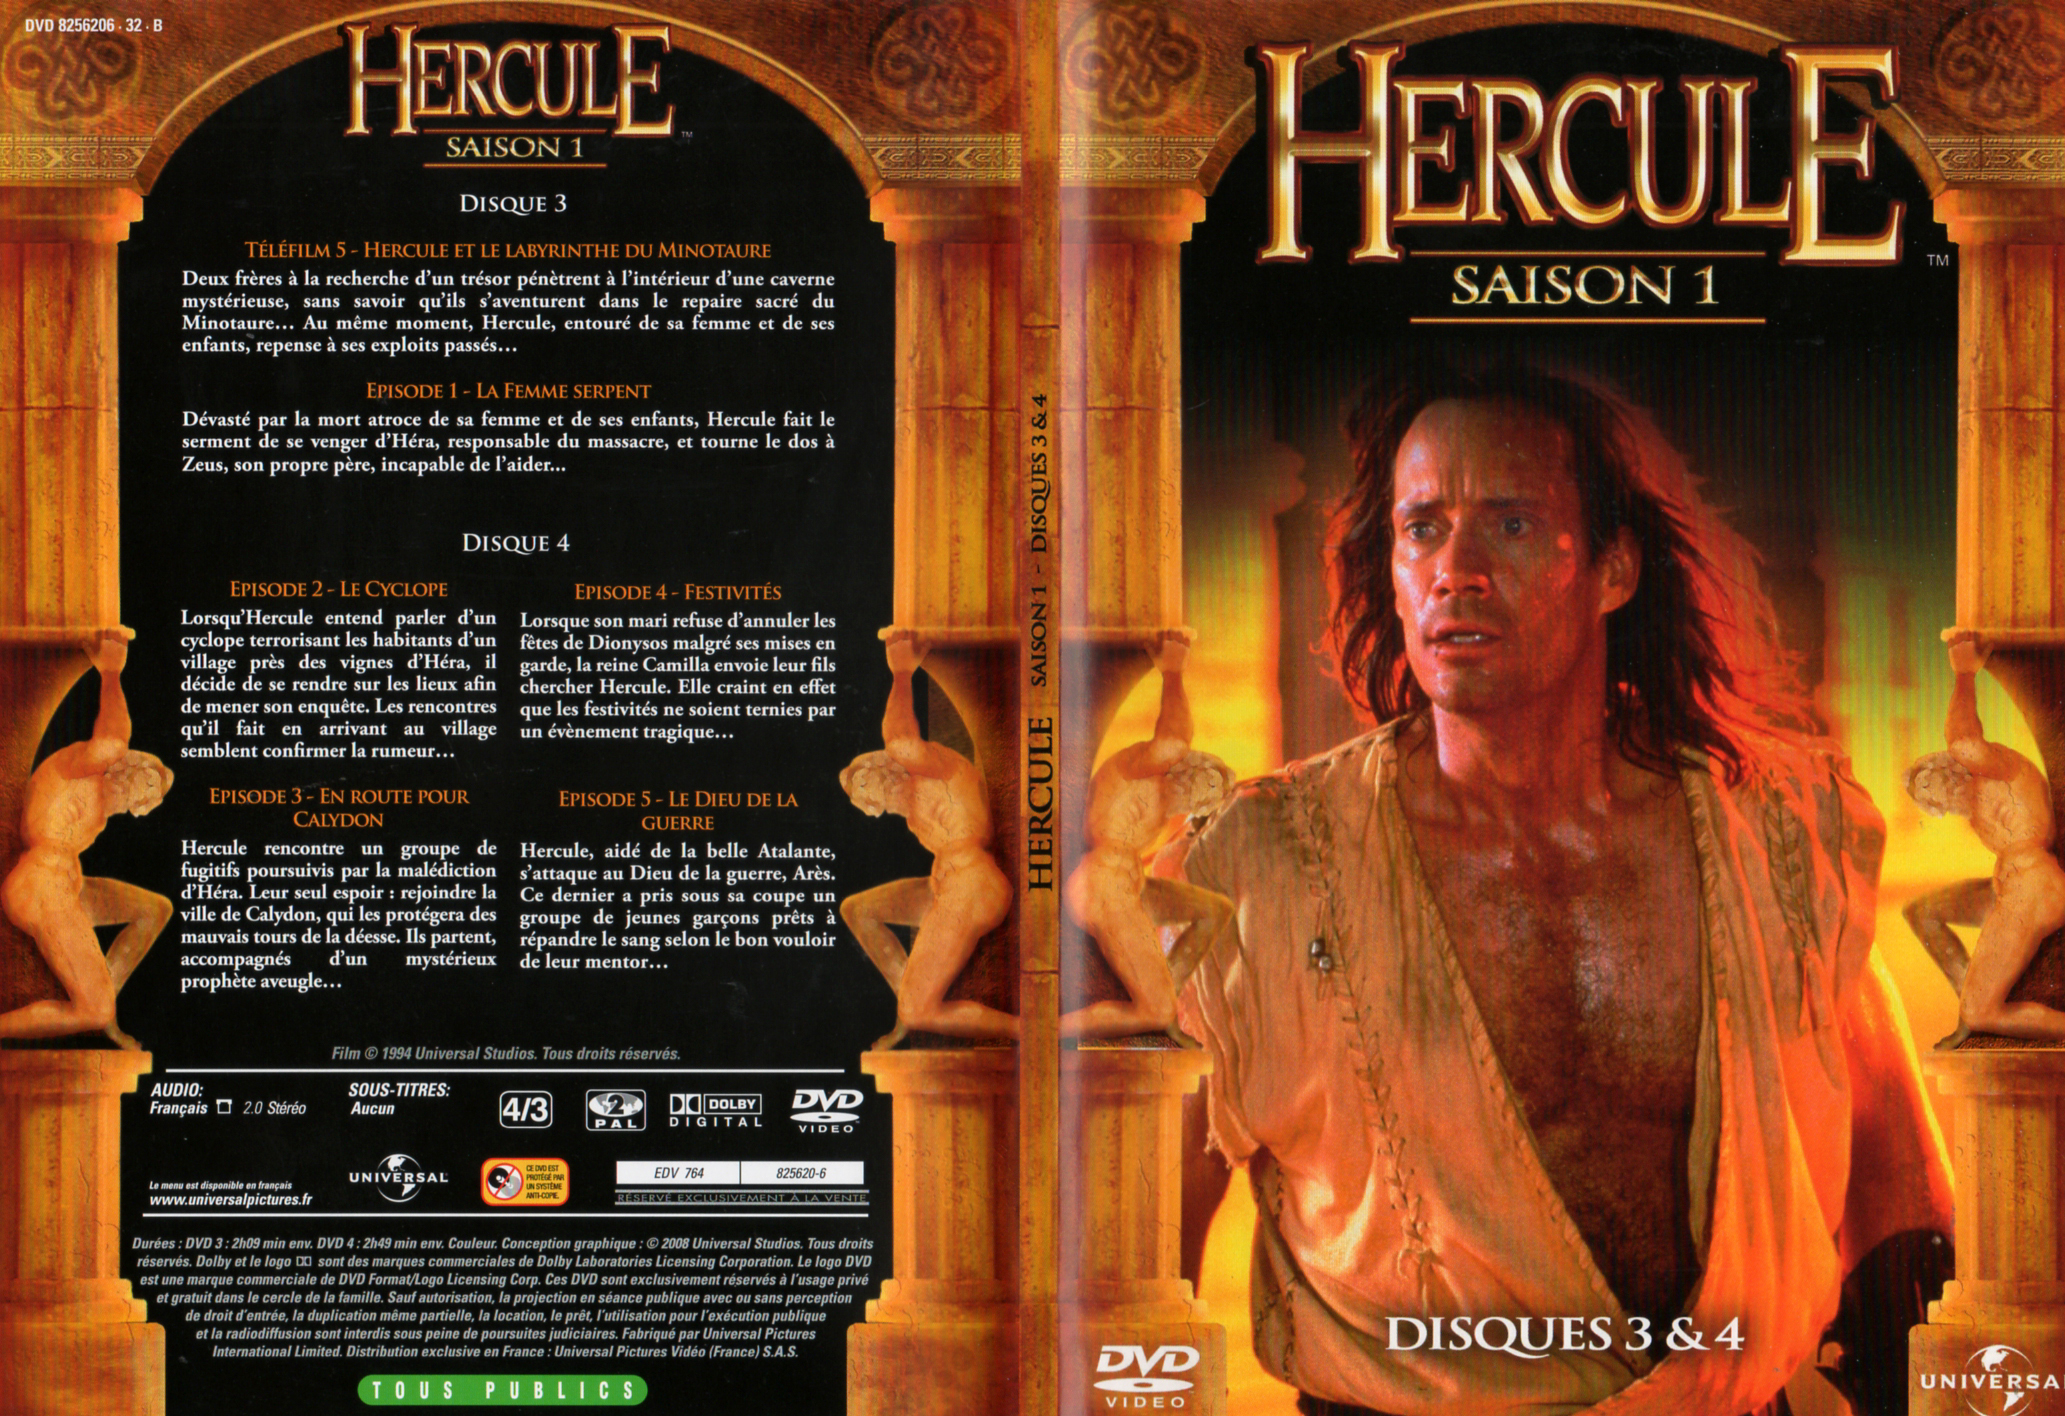 Jaquette DVD Hercule Saison 1 DVD 2